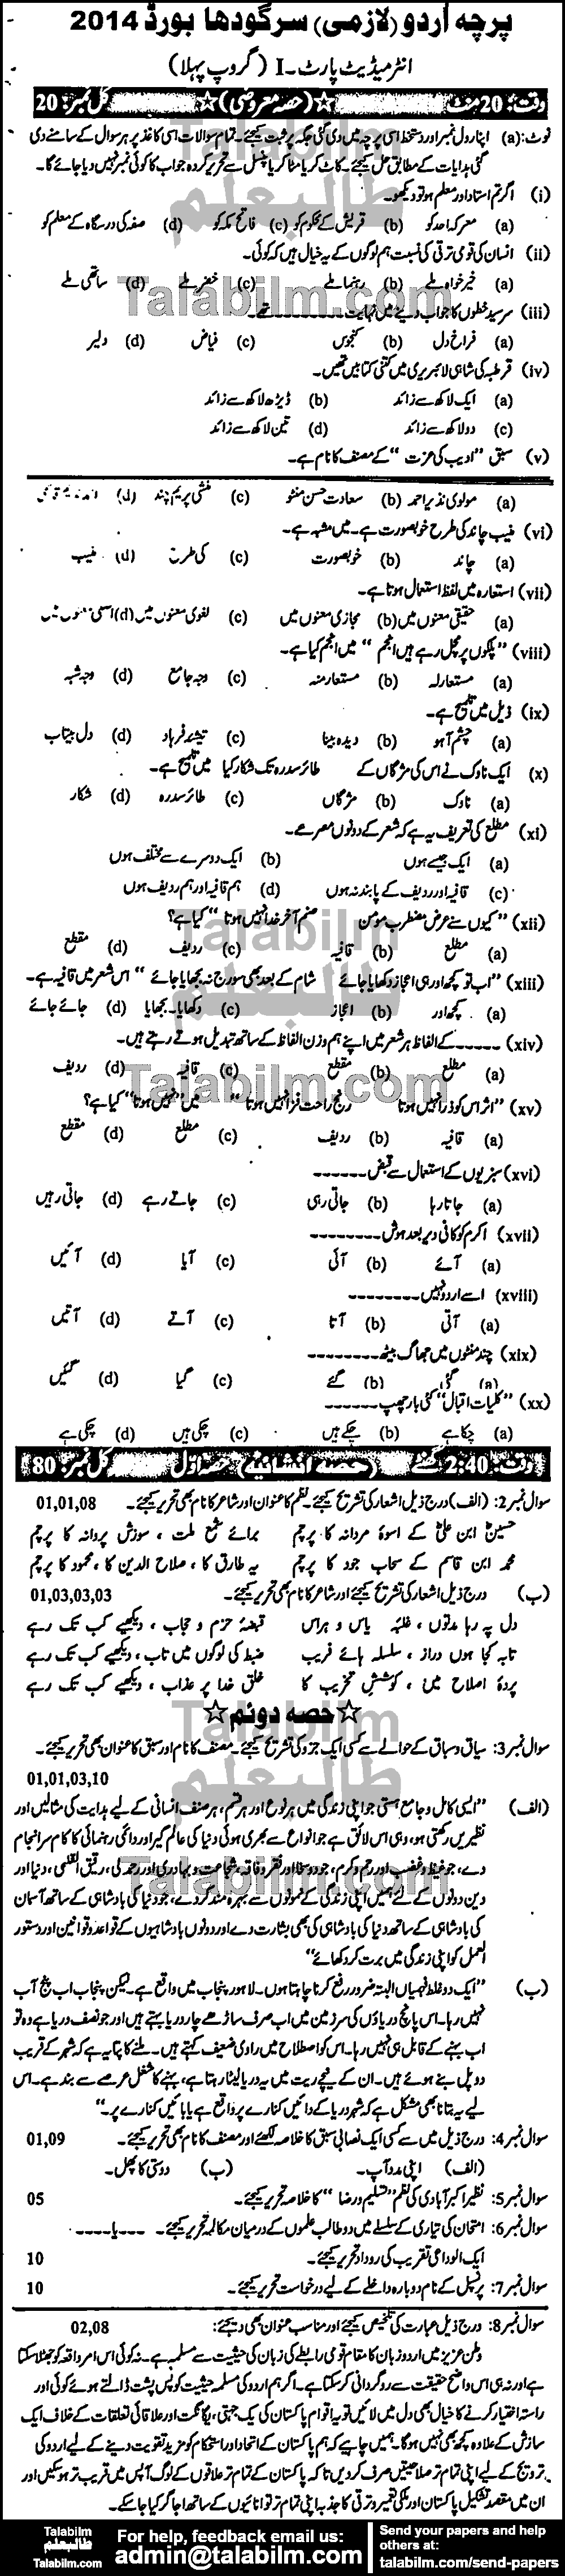 Urdu 0 past paper for Group-I 2014